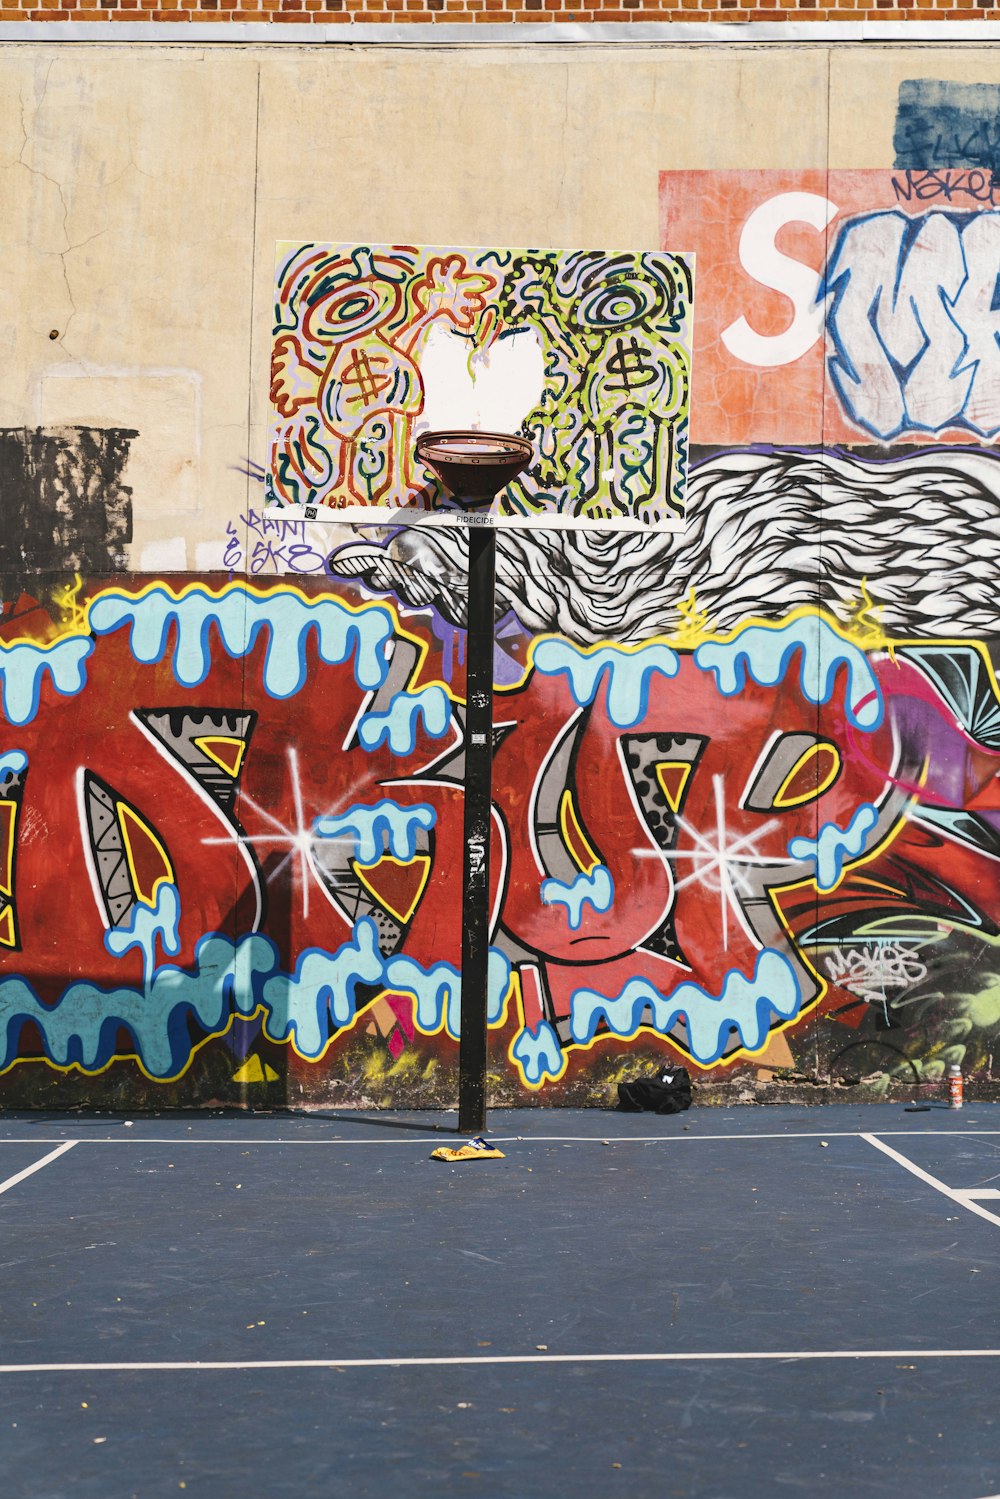 Bemalter Basketballkorb in der Nähe der Graffiti-Wand